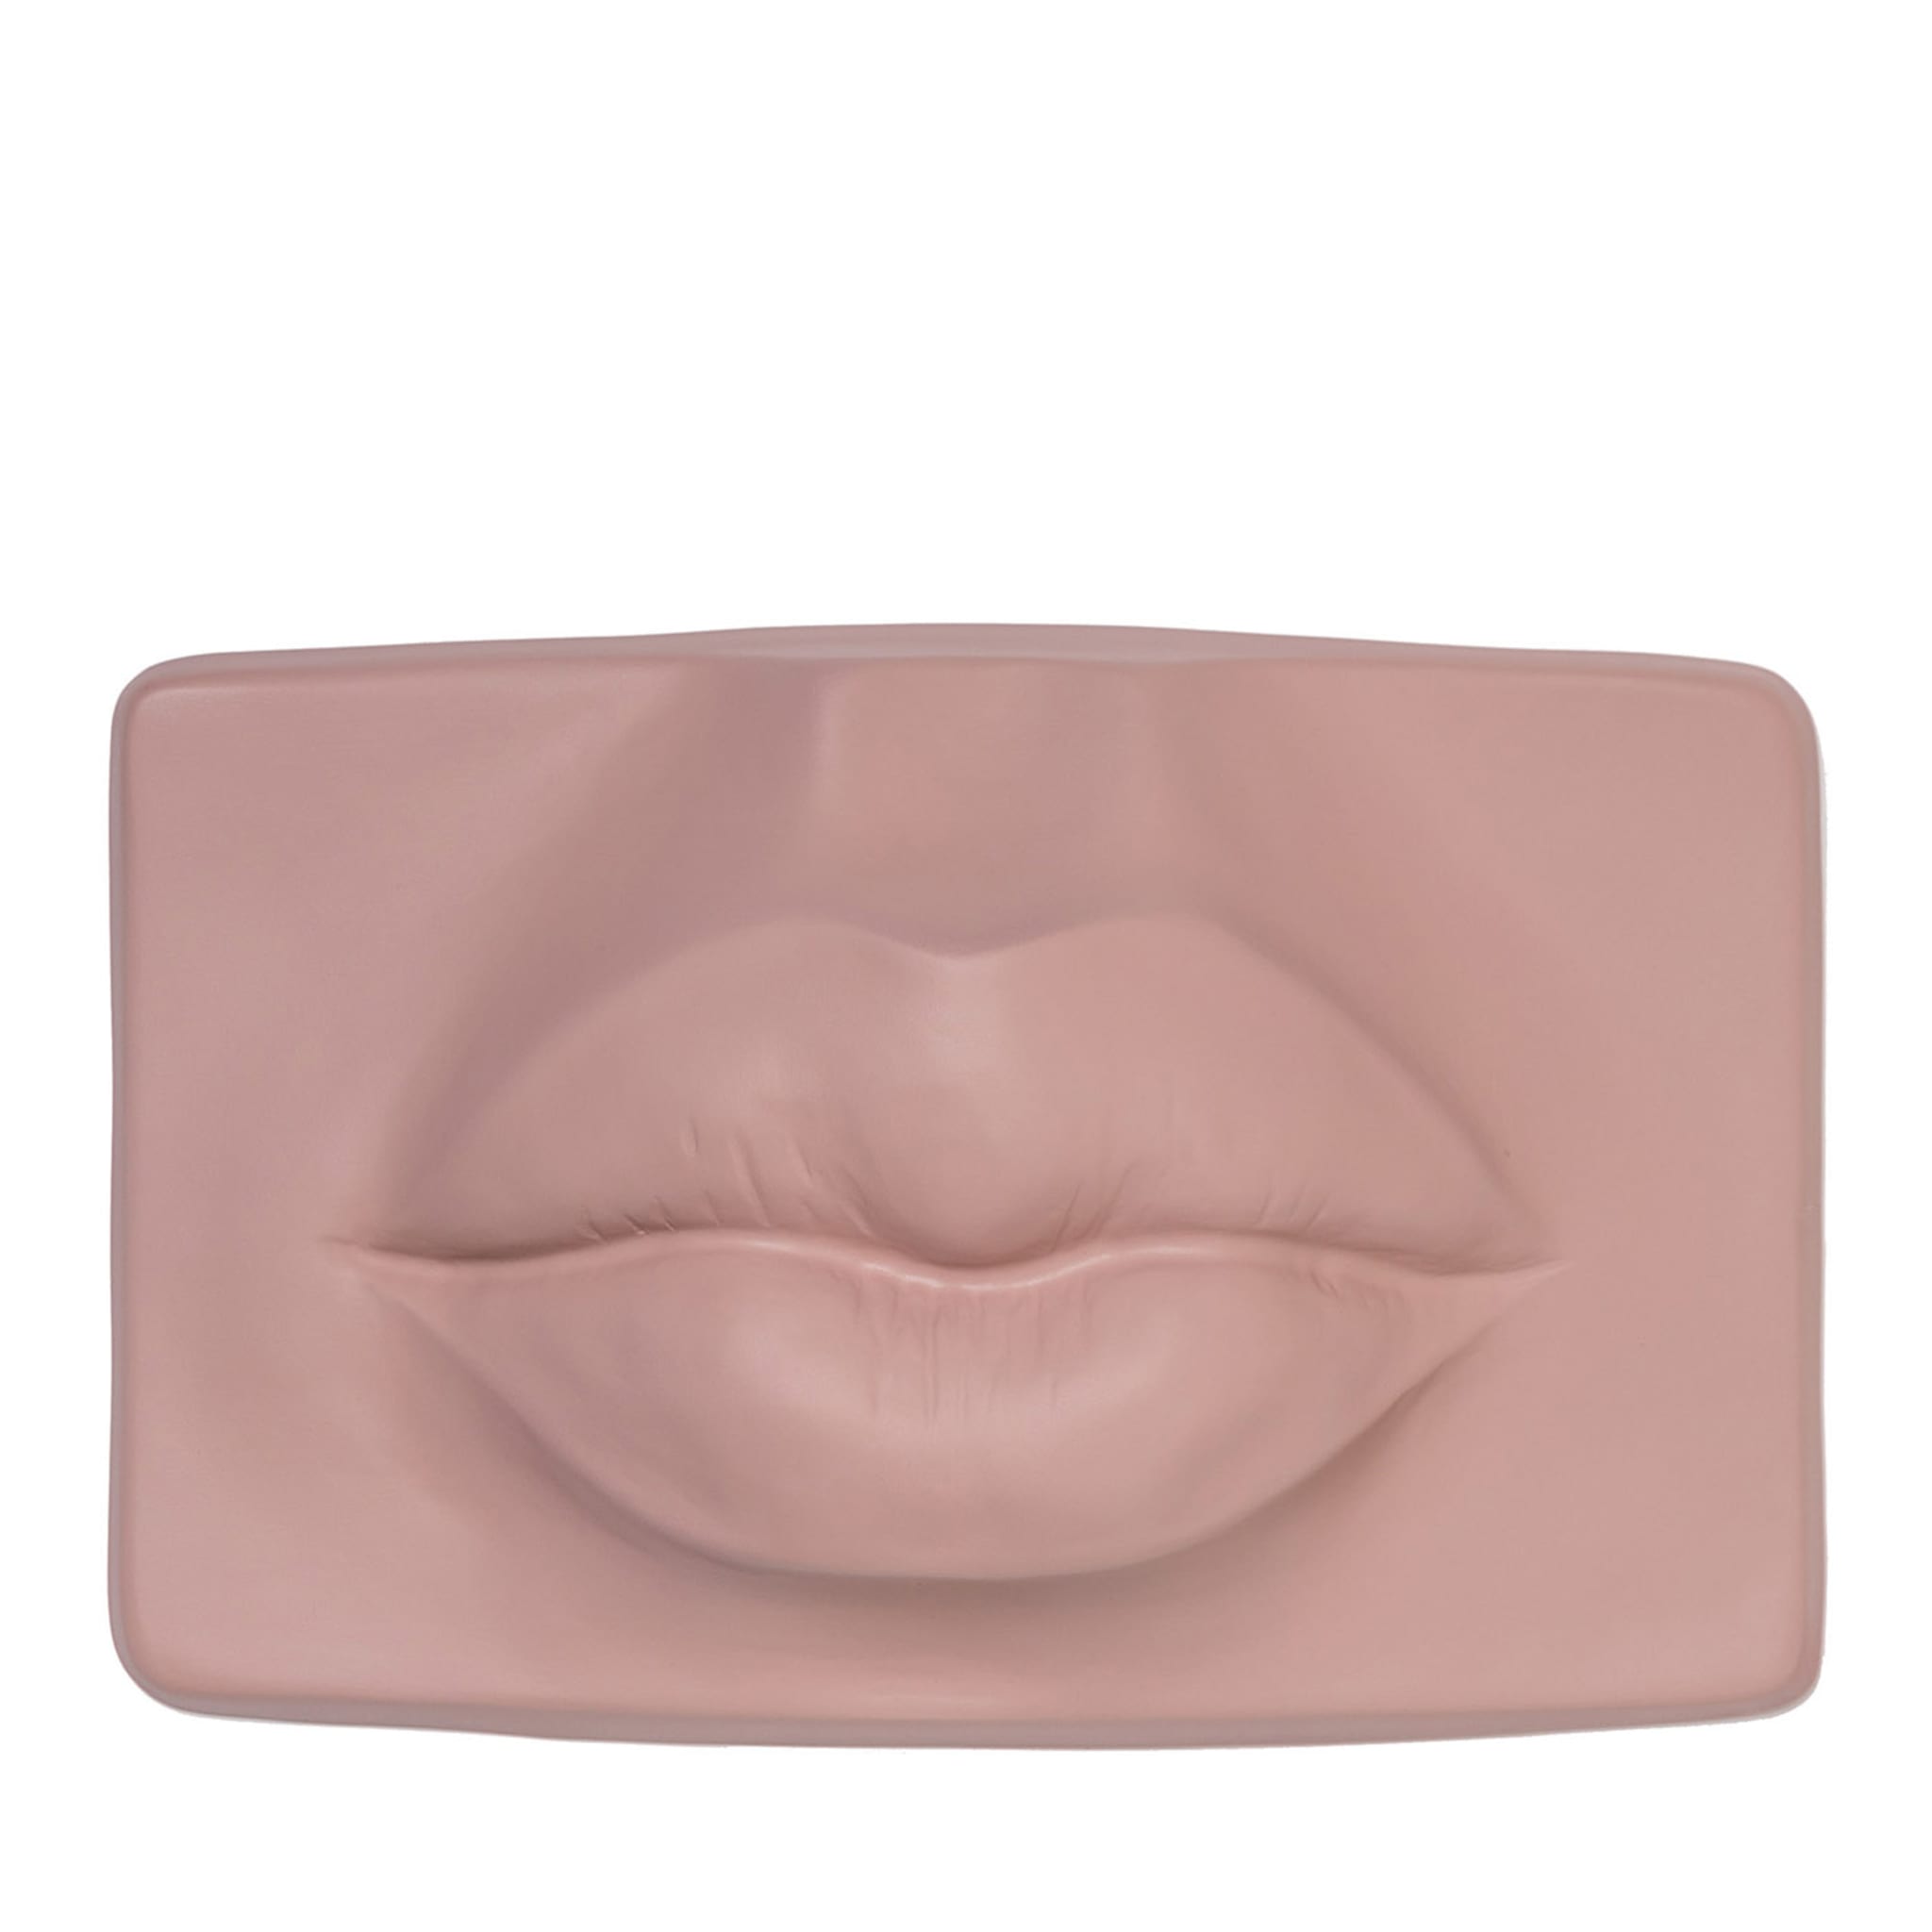 Scultura di labbra rosa Jolie - Vista principale